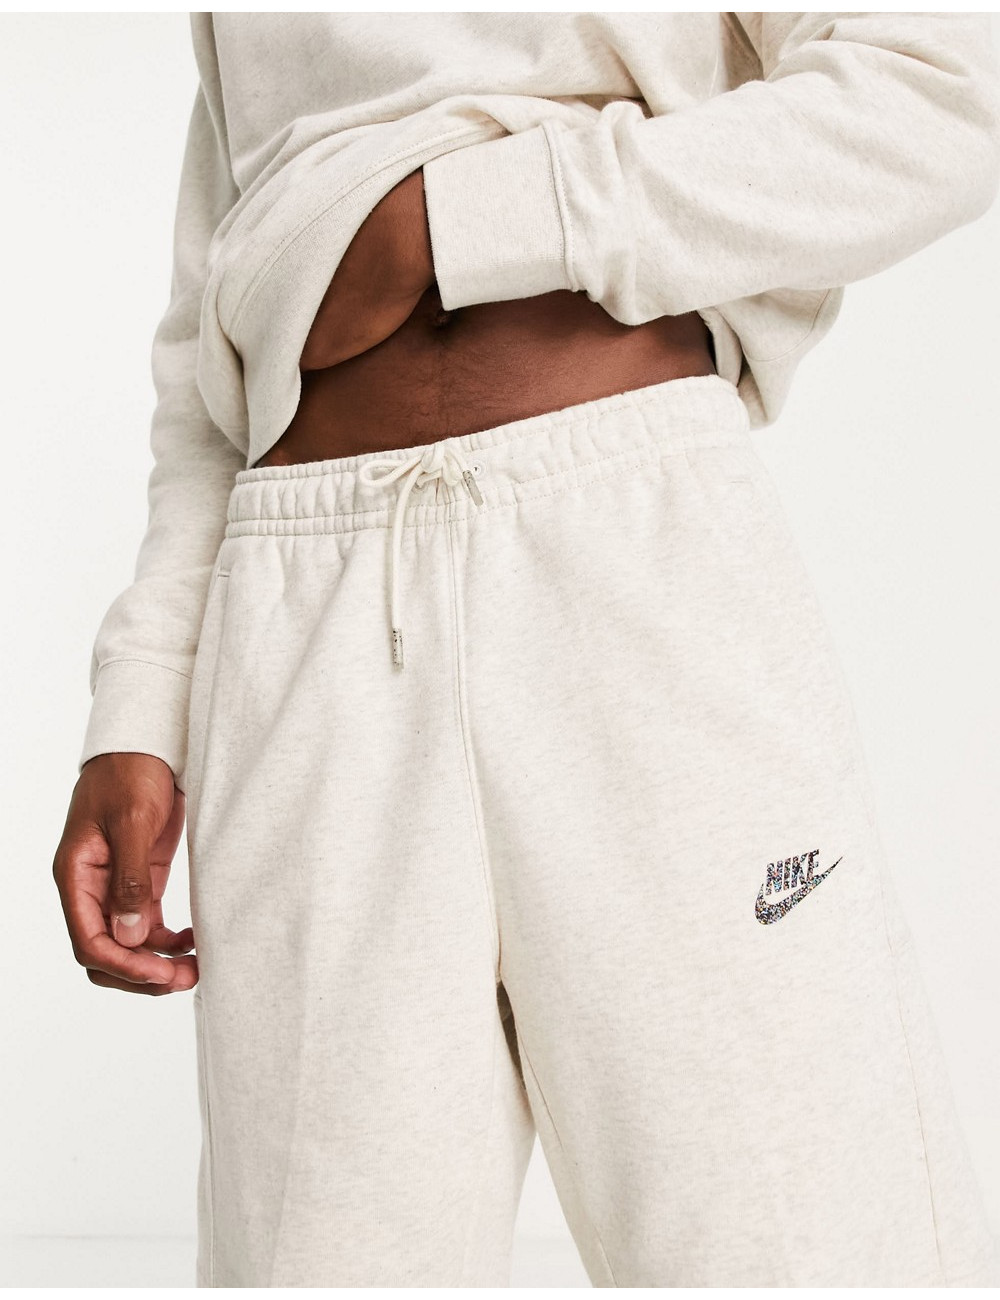 Nike Revival sweat shorts...